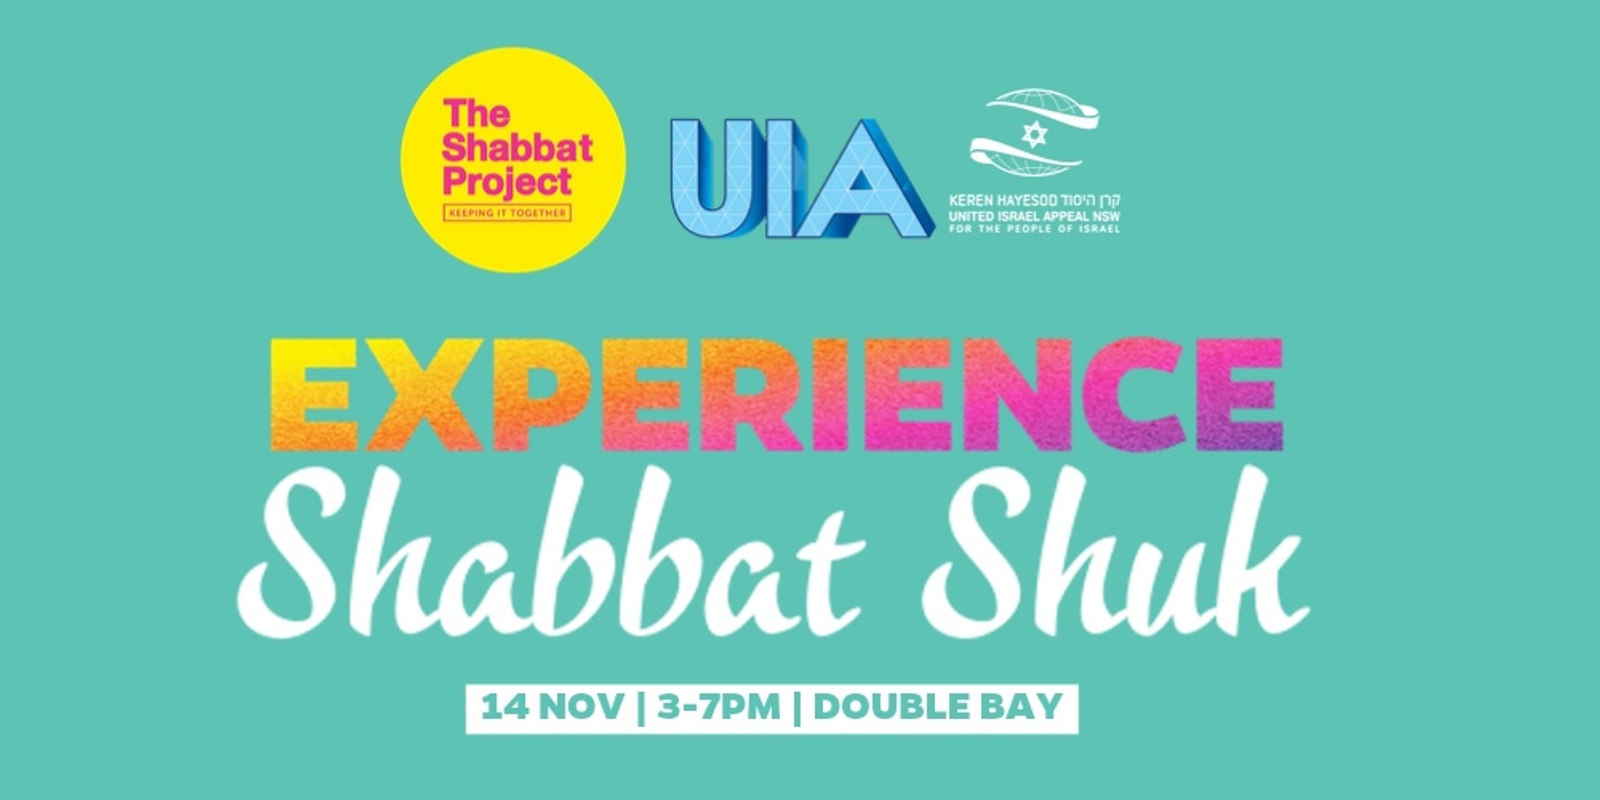 Banner image for Shabbat Shuk - 2019 Shabbat Project Sydney